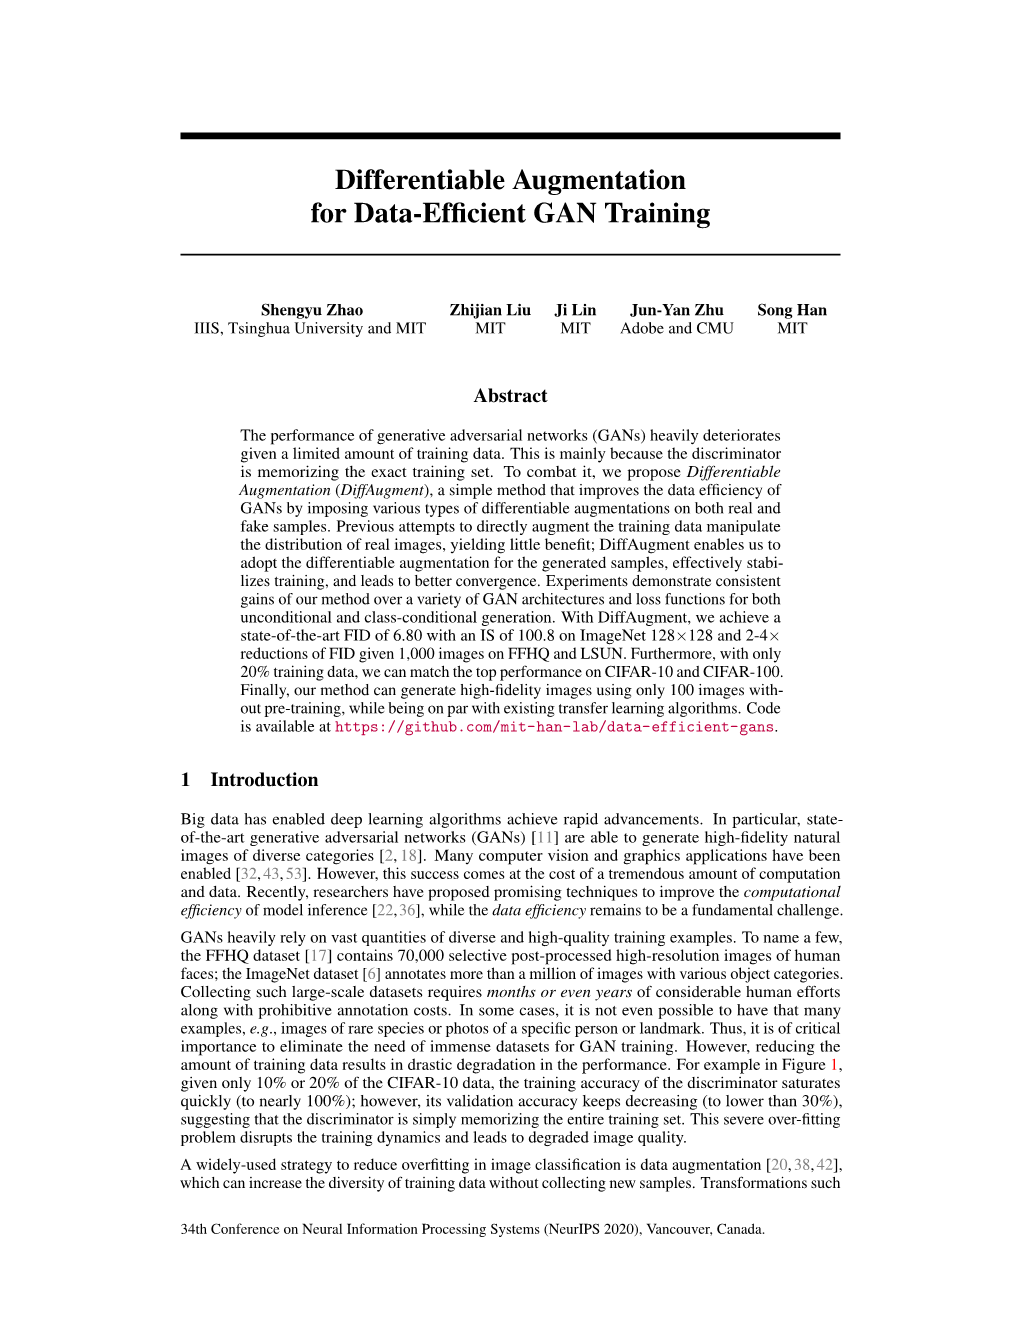 Differentiable Augmentation for Data-Efficient GAN Training